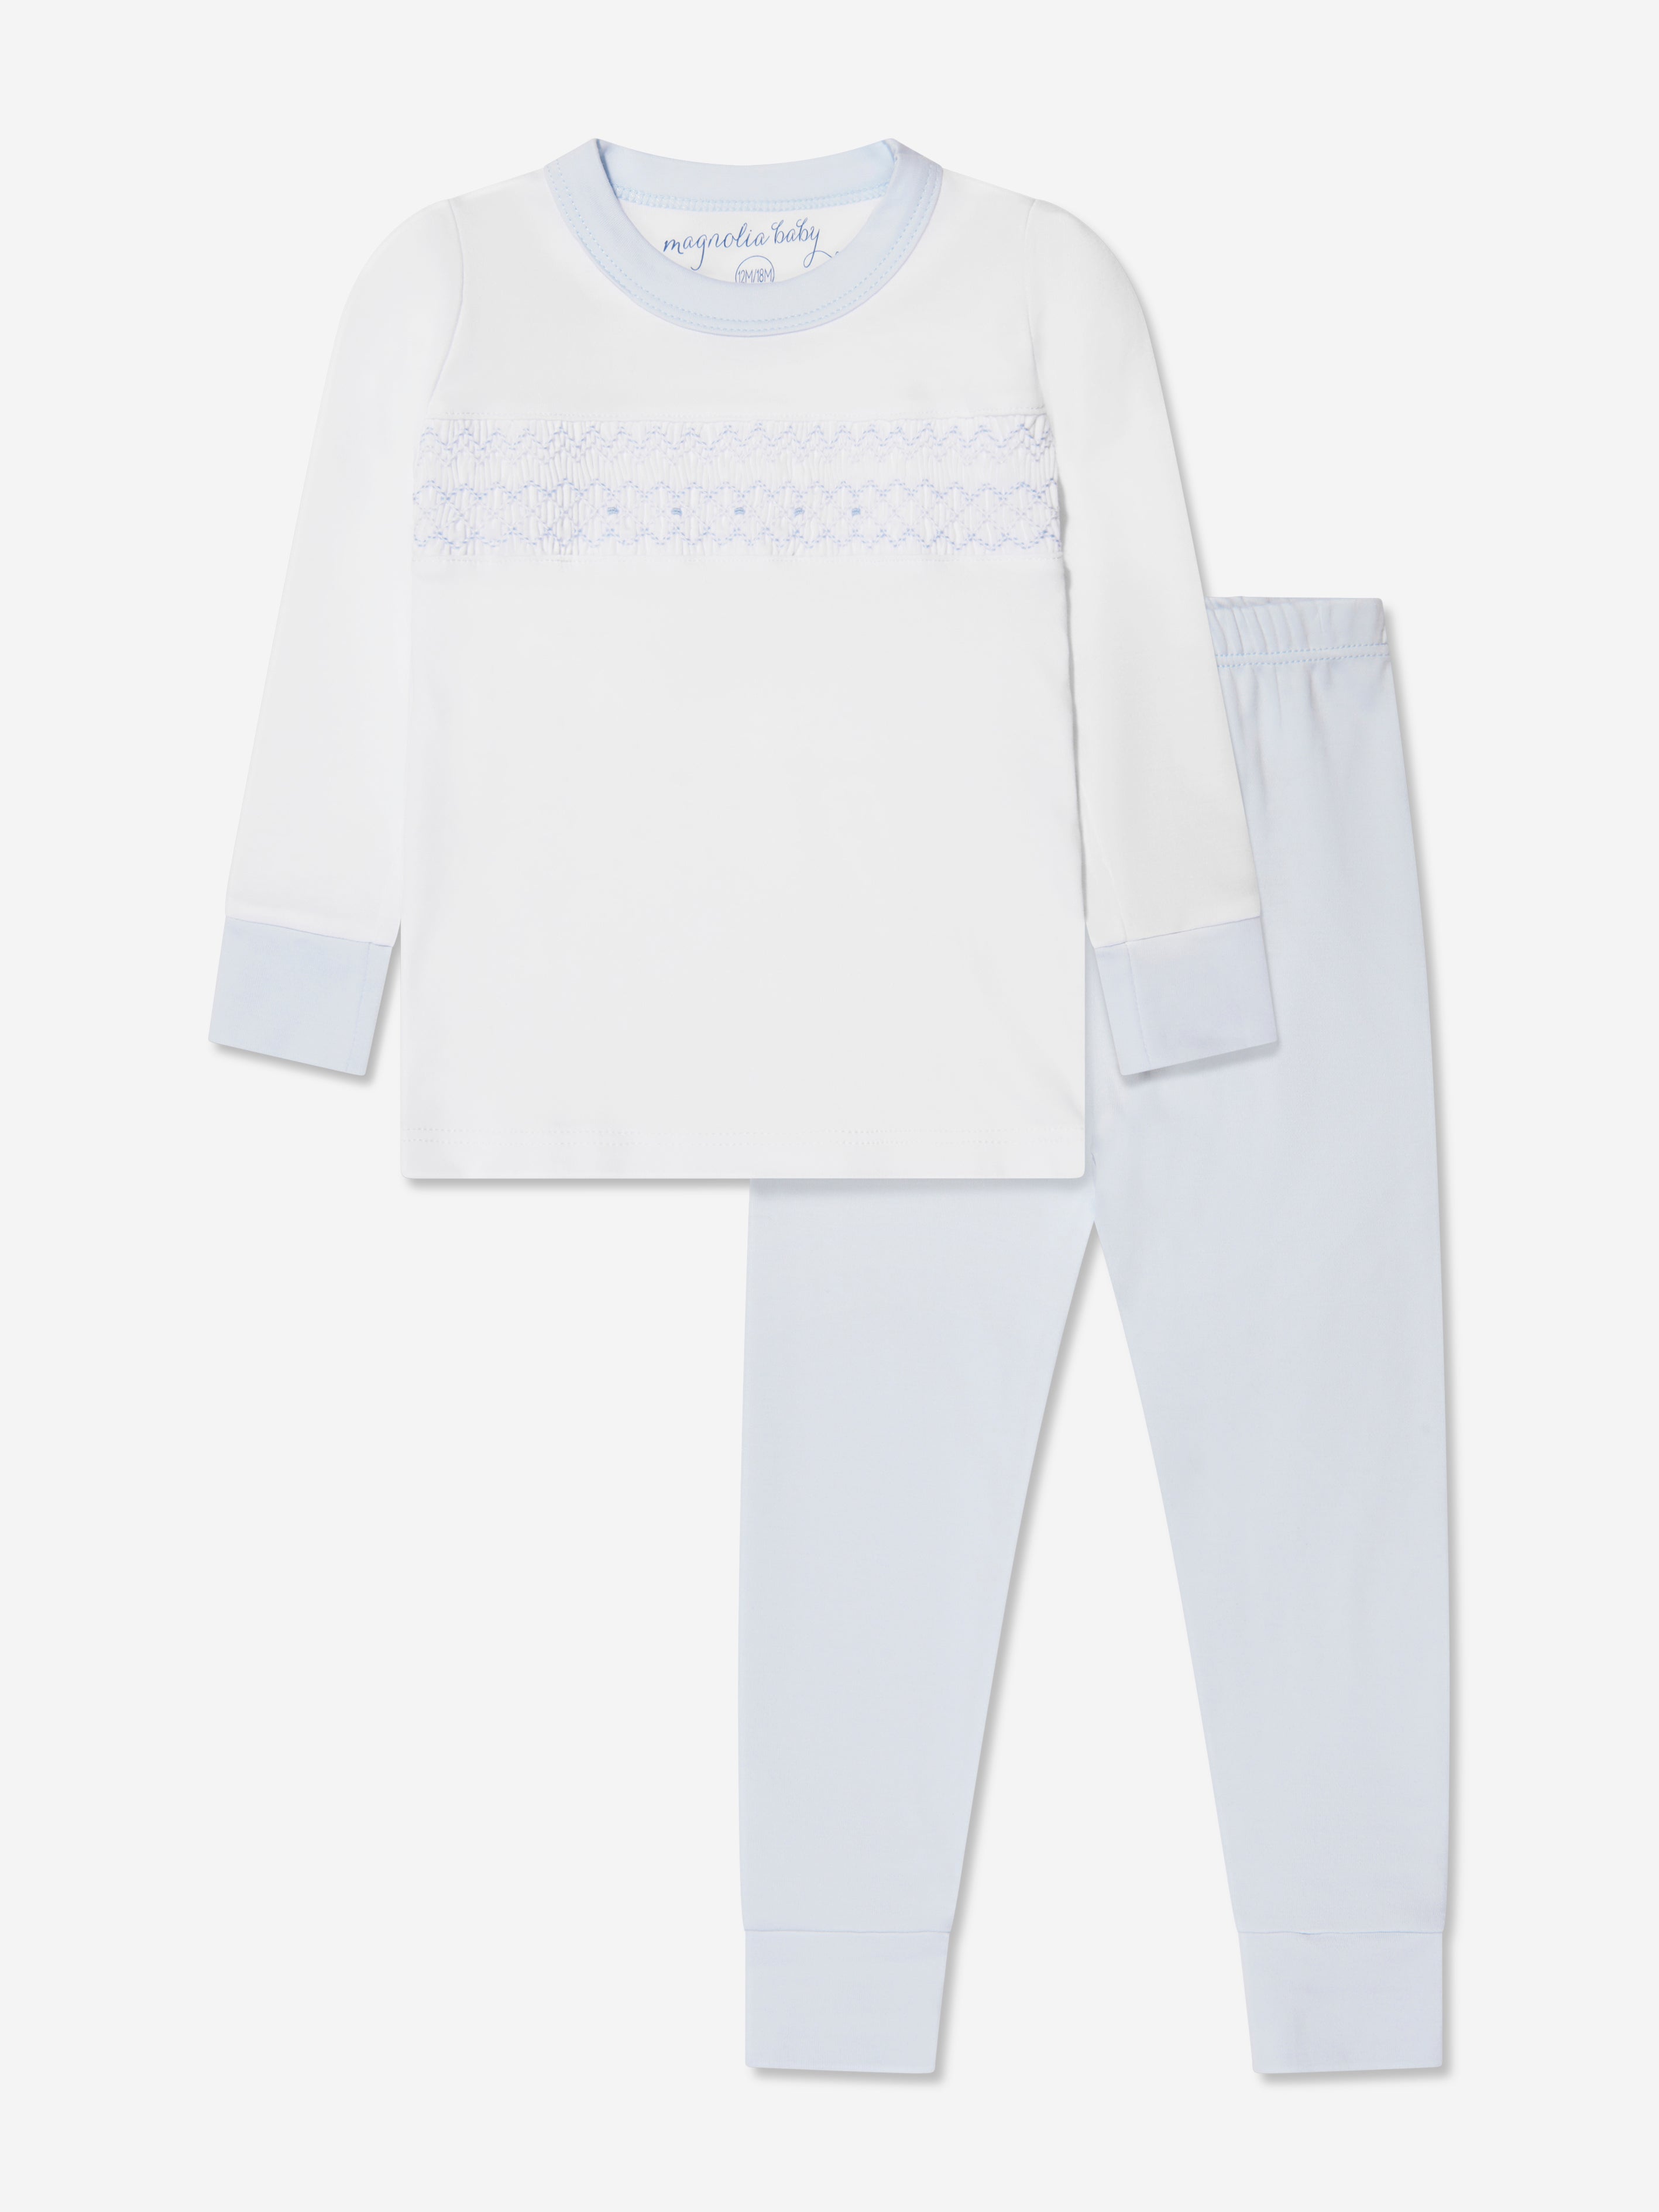 Baby Boy Designer Sleepwear & Pajamas